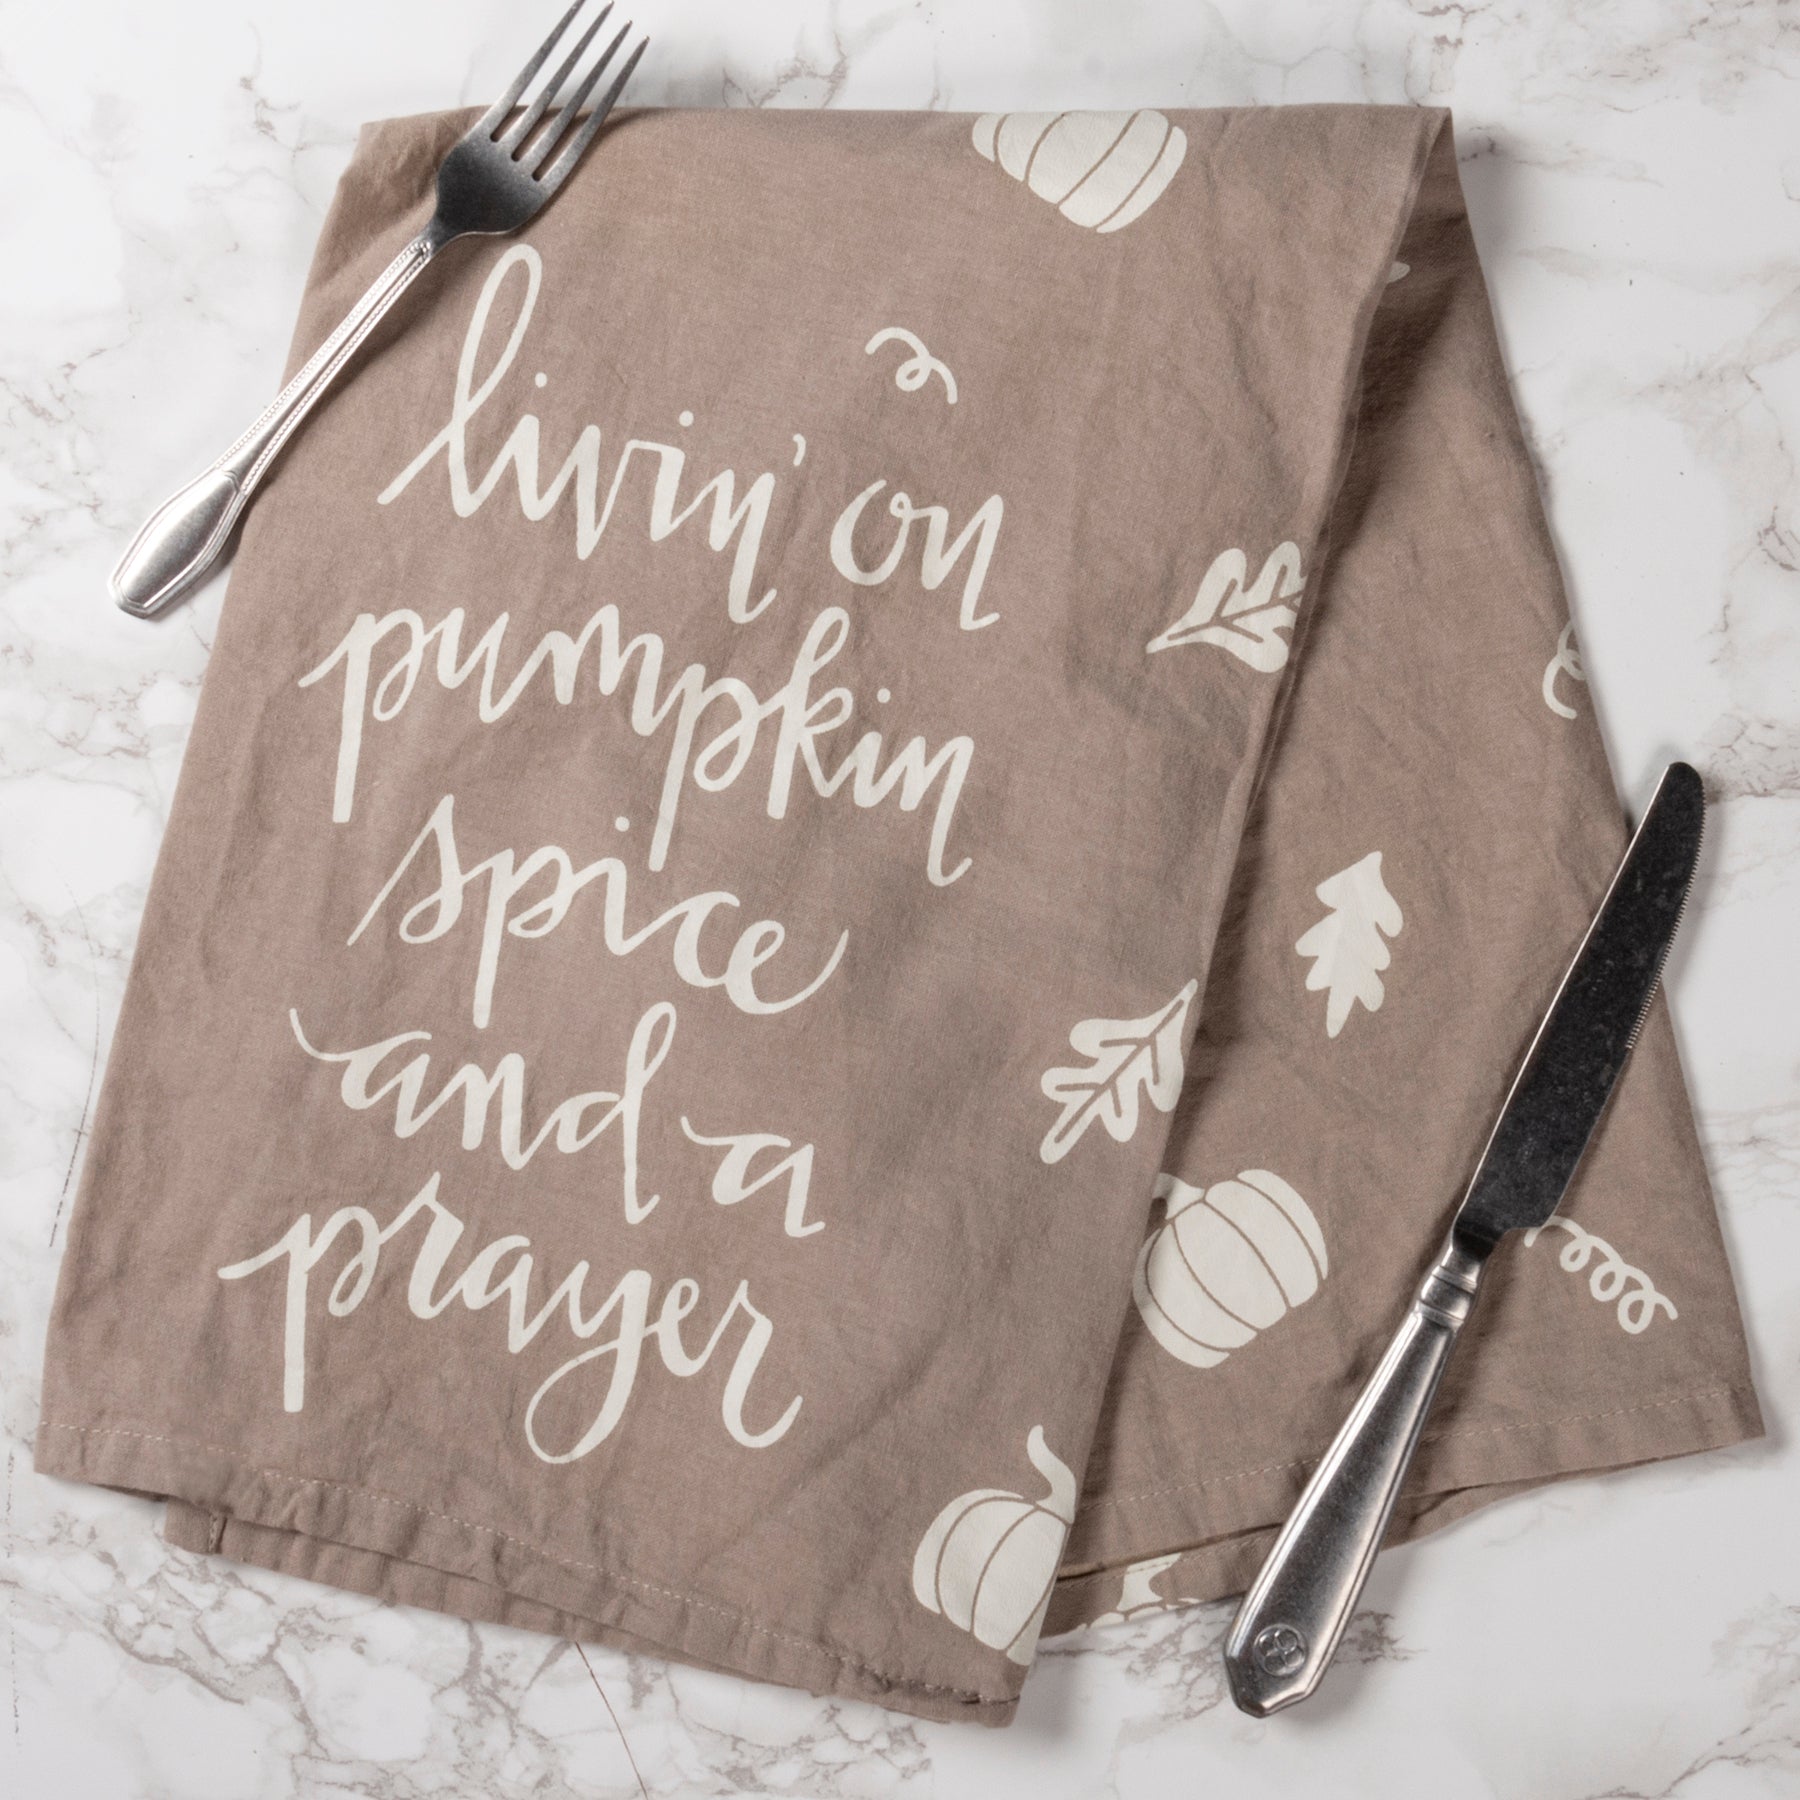 Pumkpin Spice & Prayer Dish Towel